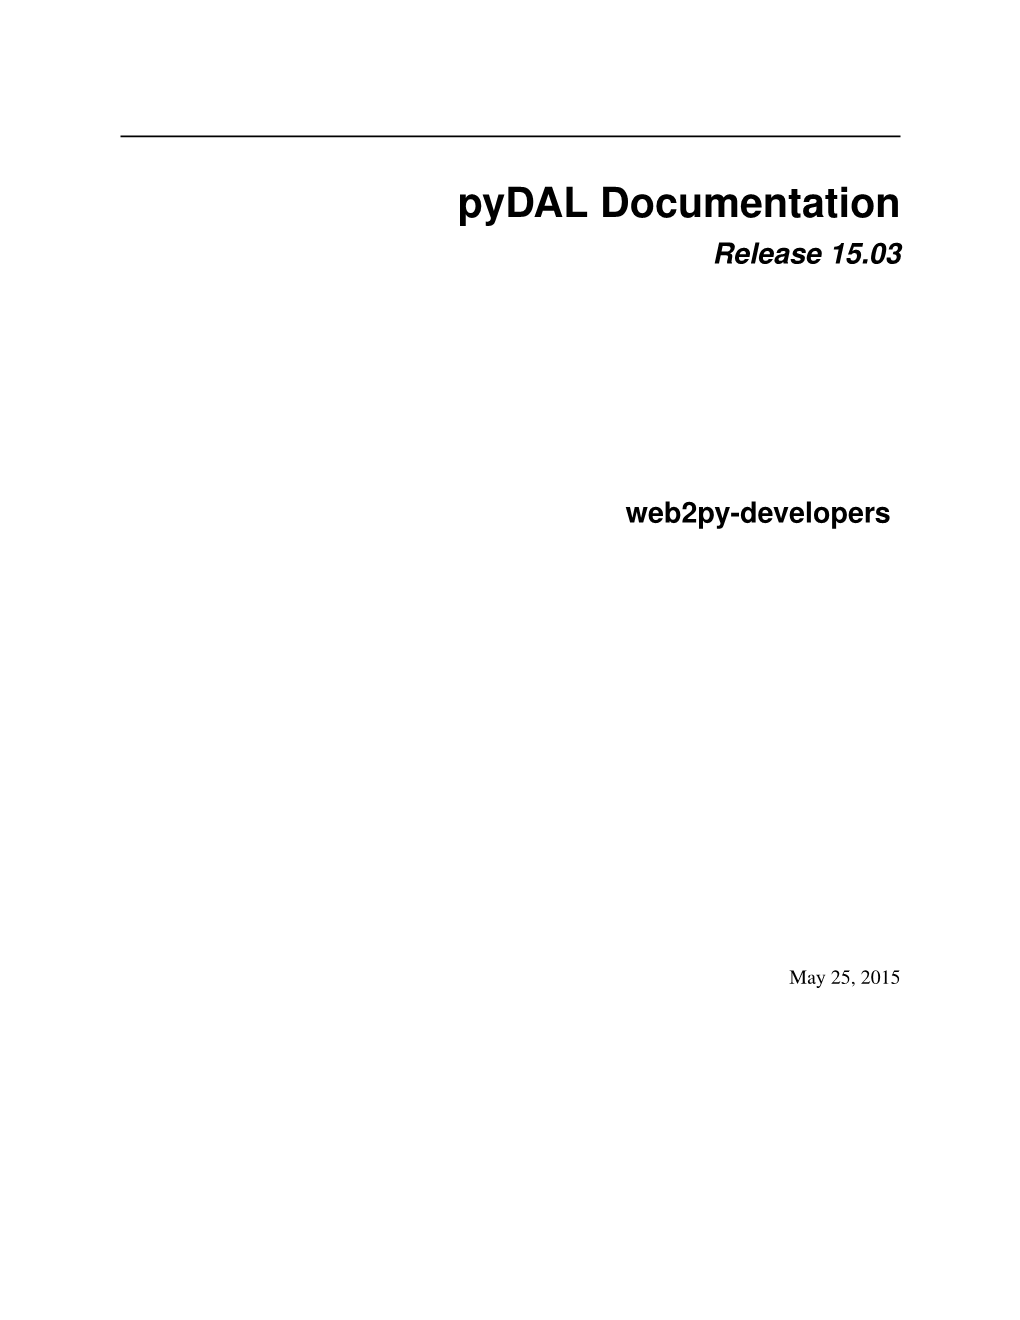 Pydal Documentation Release 15.03